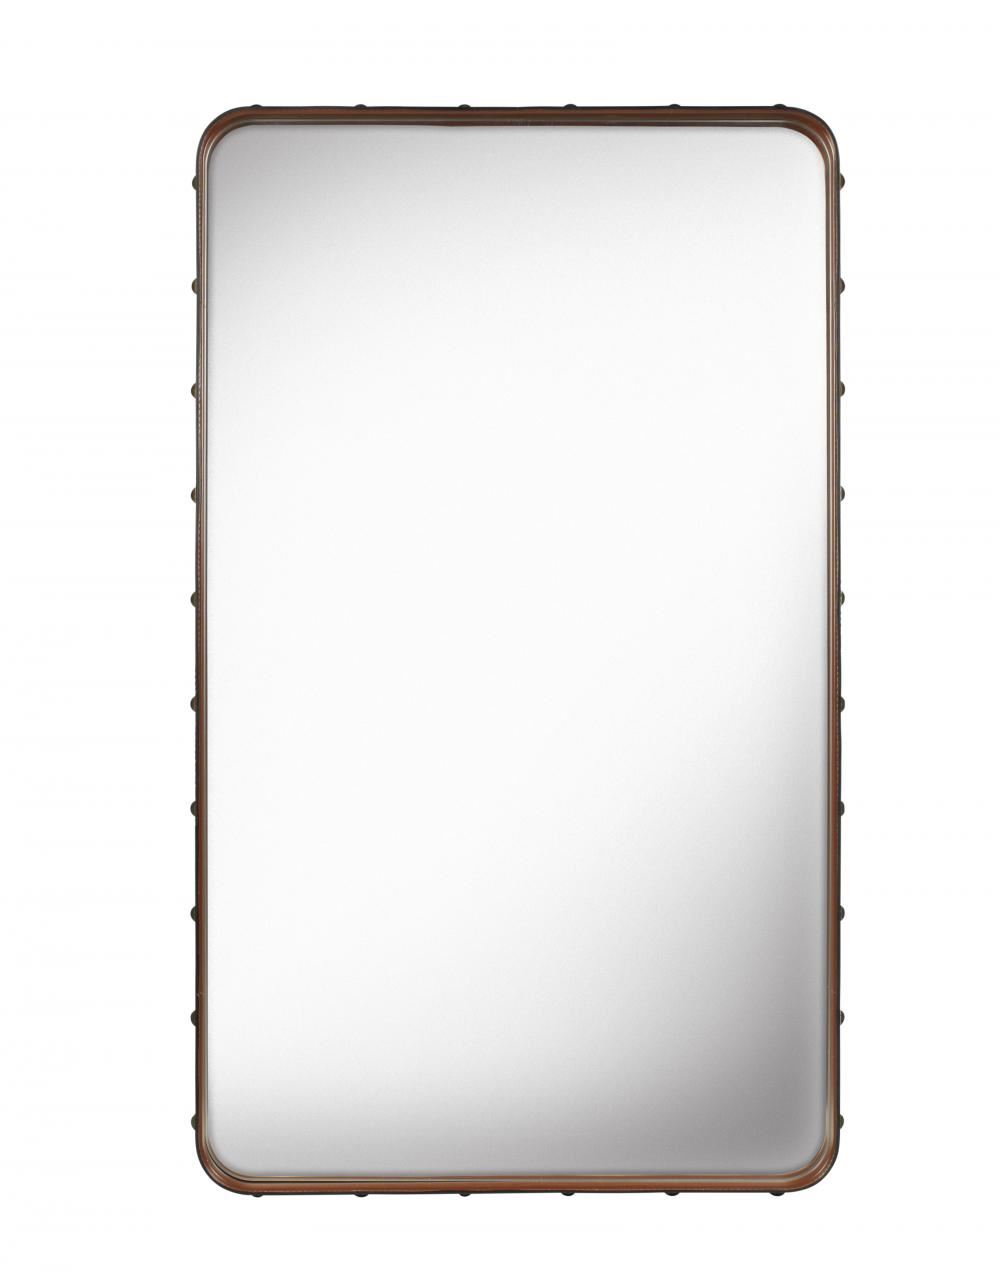 Adnet Rectangulaire Wall Mirror Medium Tan